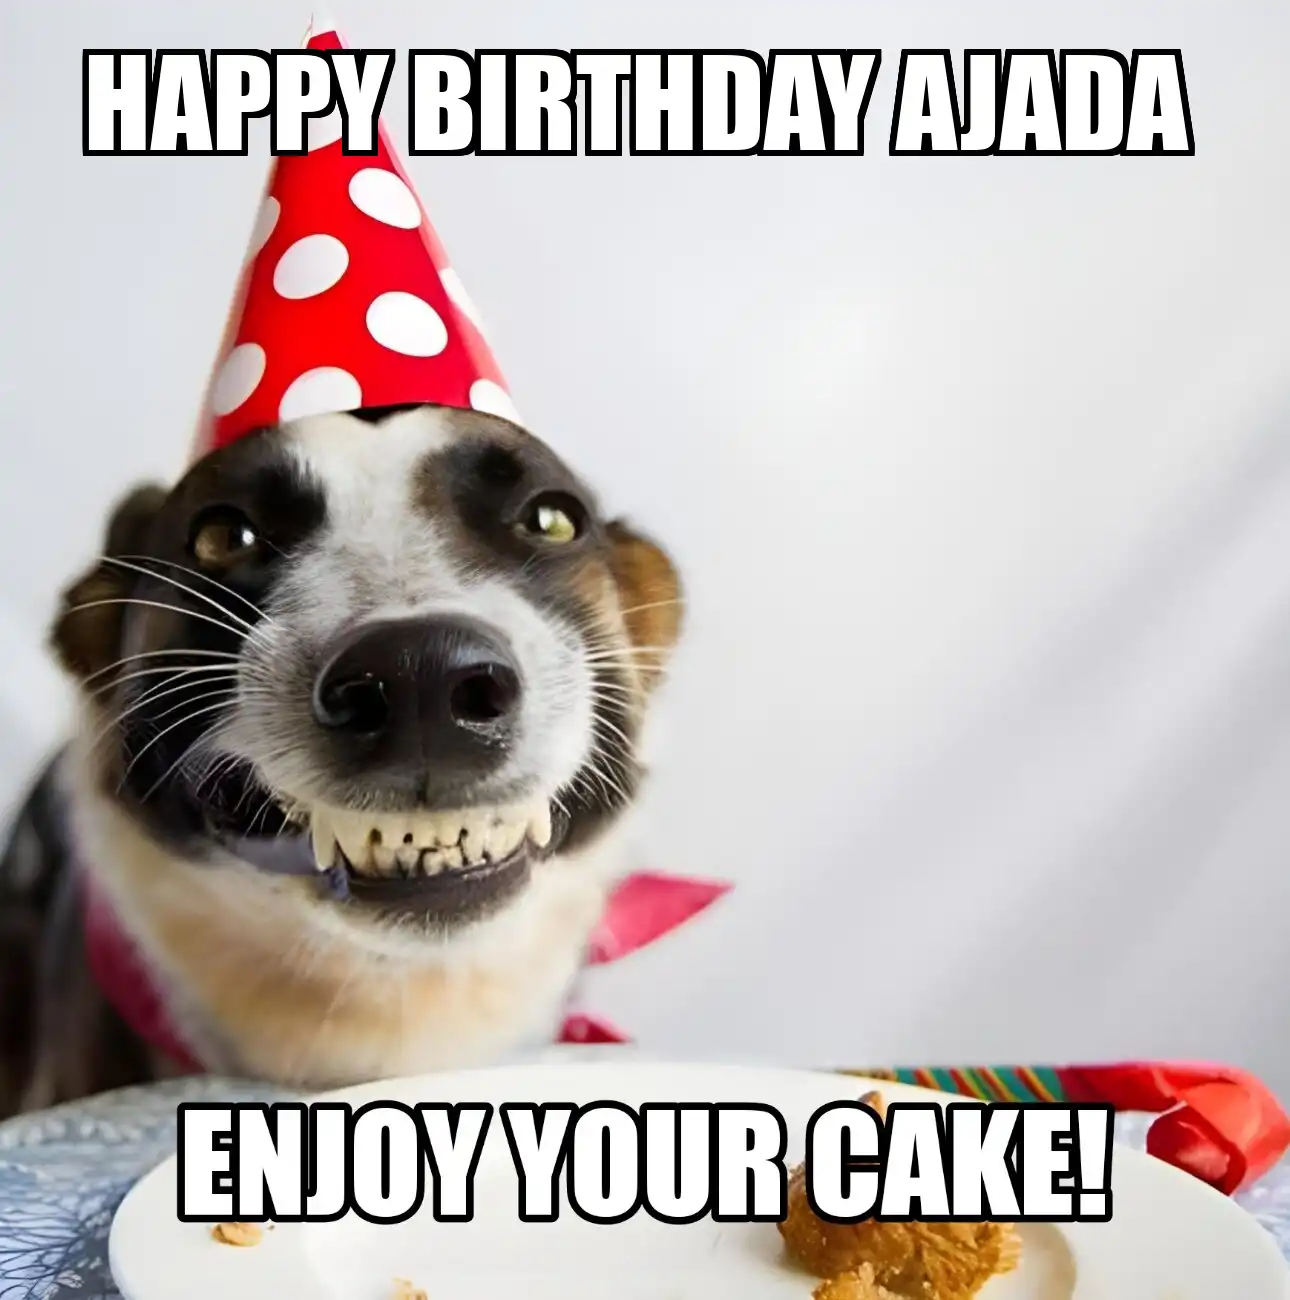 Happy Birthday Ajada Enjoy Your Cake Dog Meme